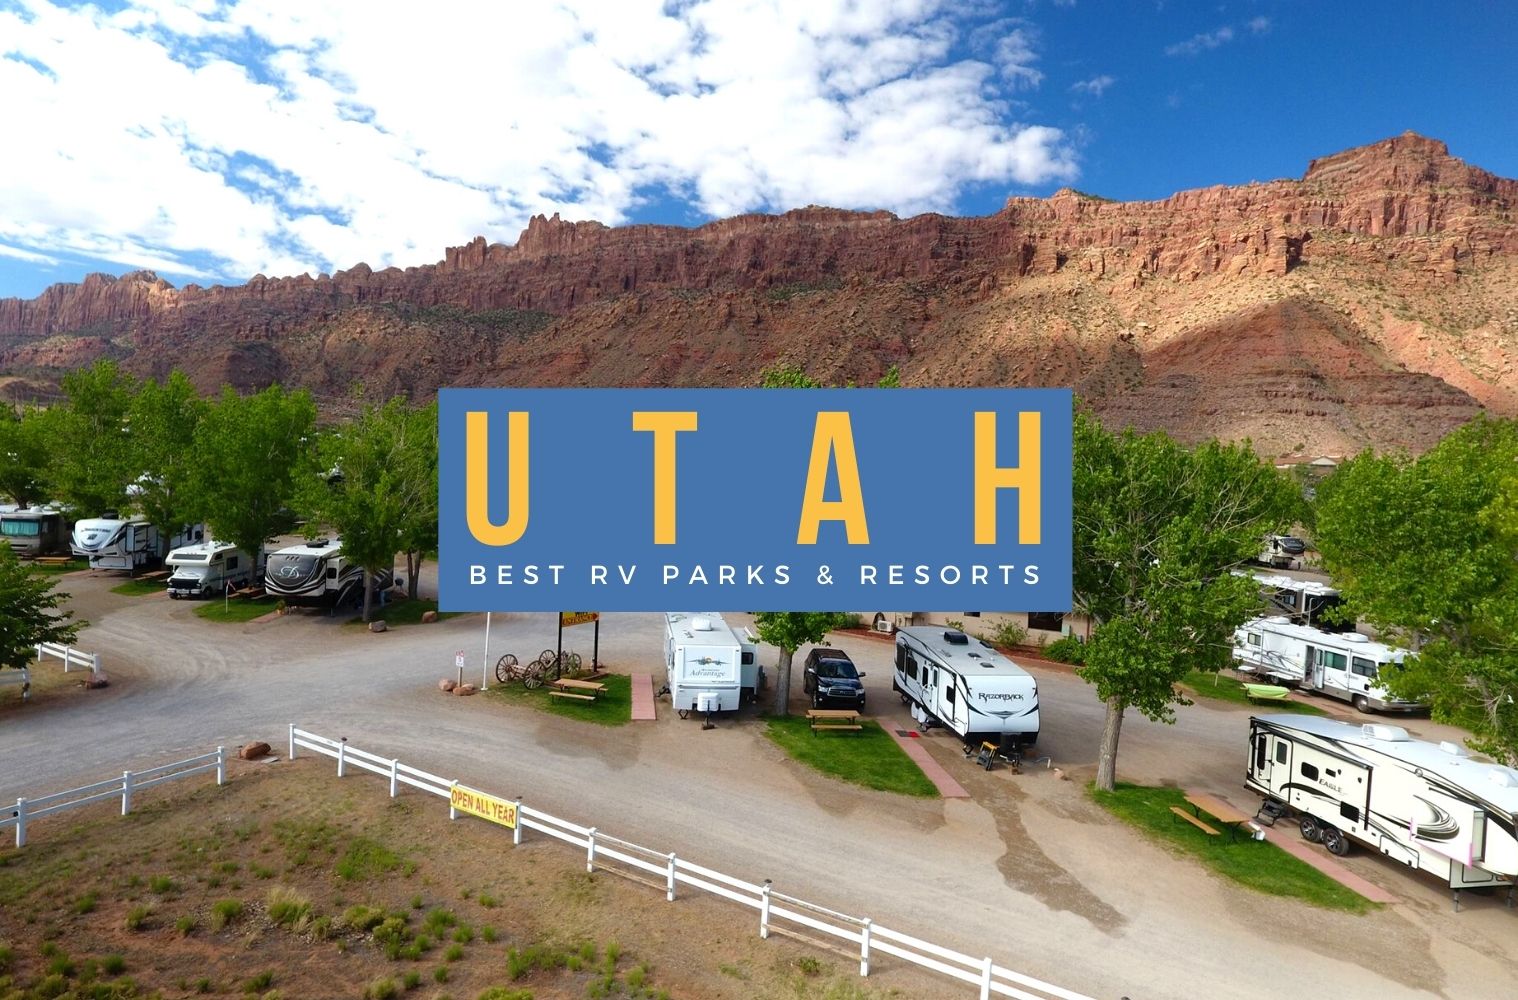 Best RV Parks & Resorts in Utah